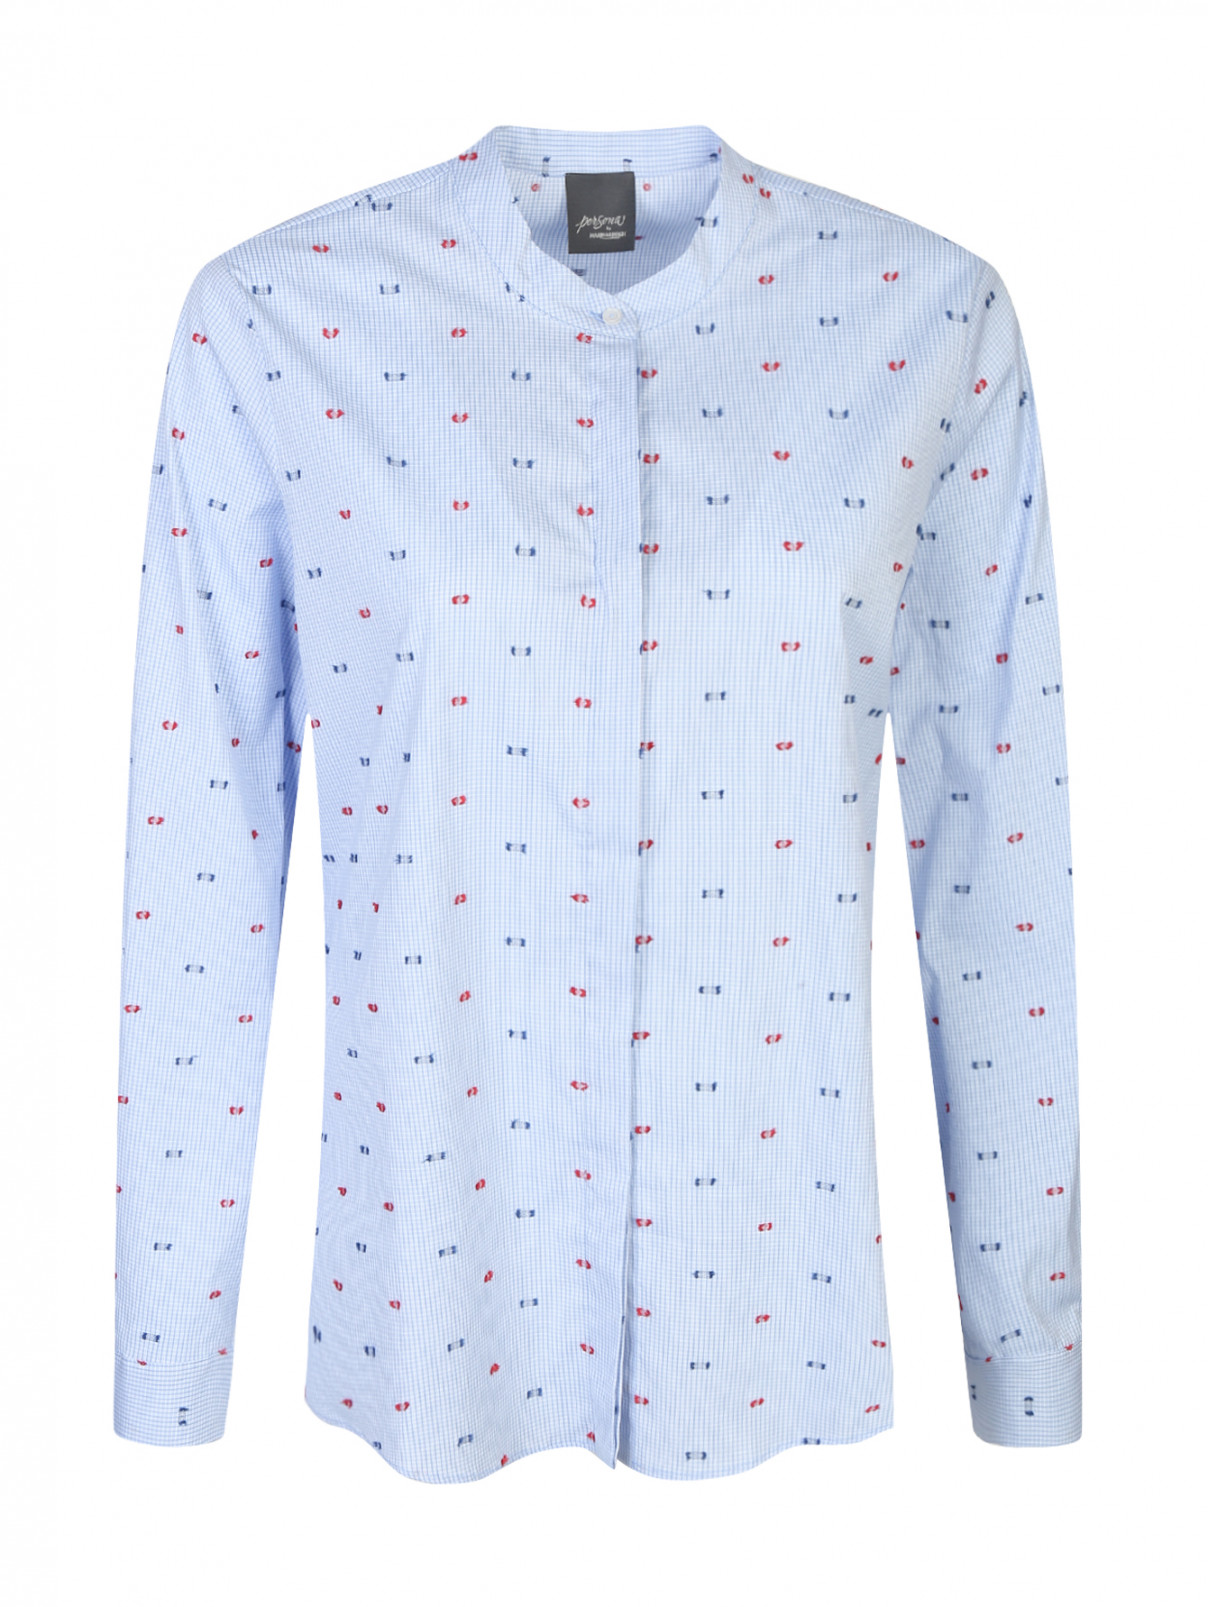 Рубашка из хлопка с узором Persona by Marina Rinaldi  –  Общий вид  – Цвет:  Синий